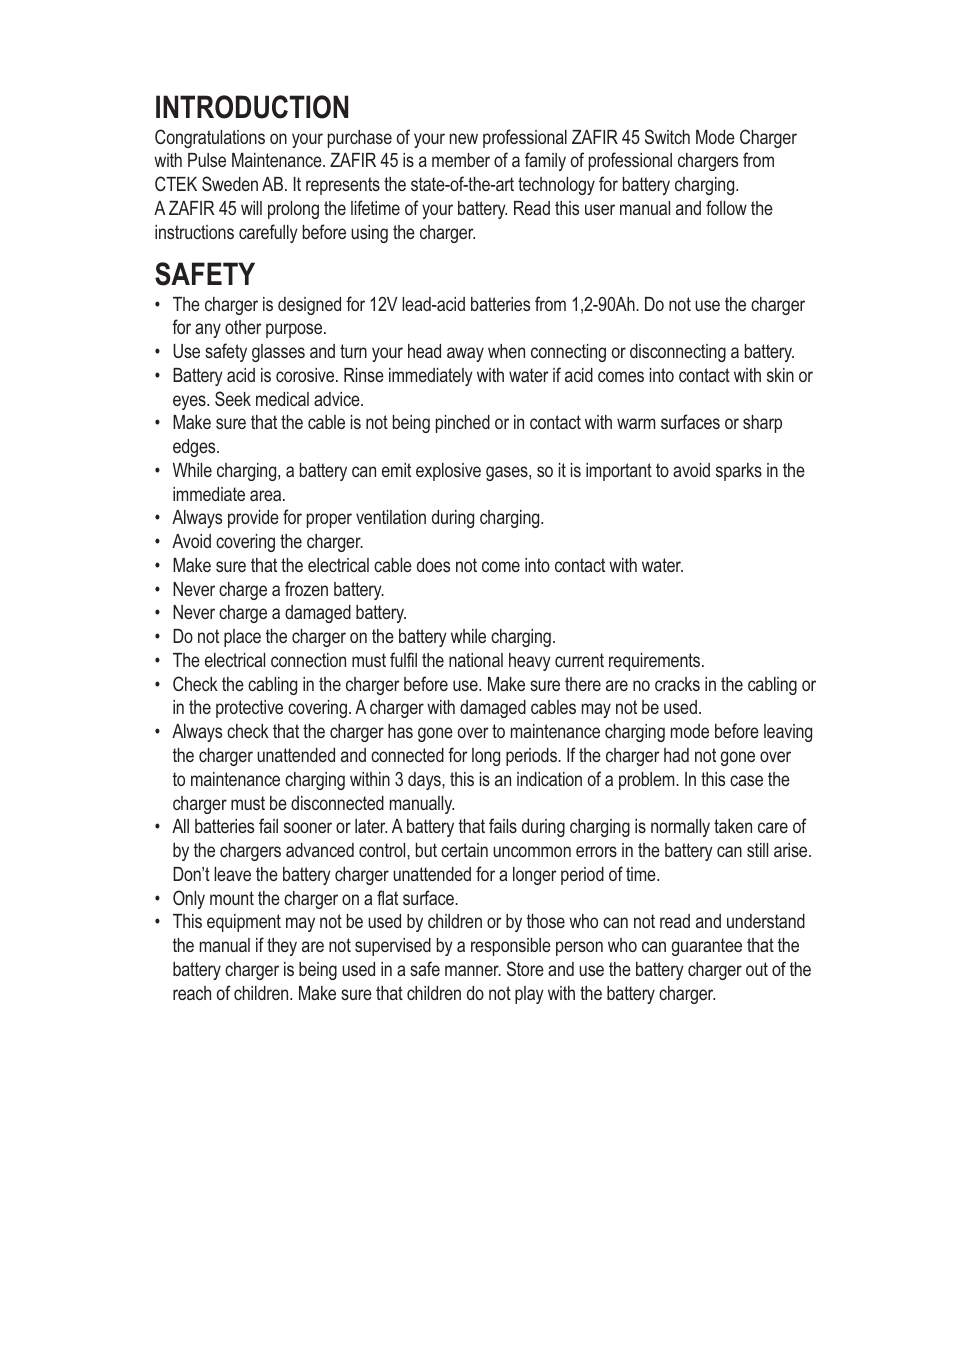 Introduction, Safety | CTEK ZAFIR 45 User Manual | Page 2 / 7